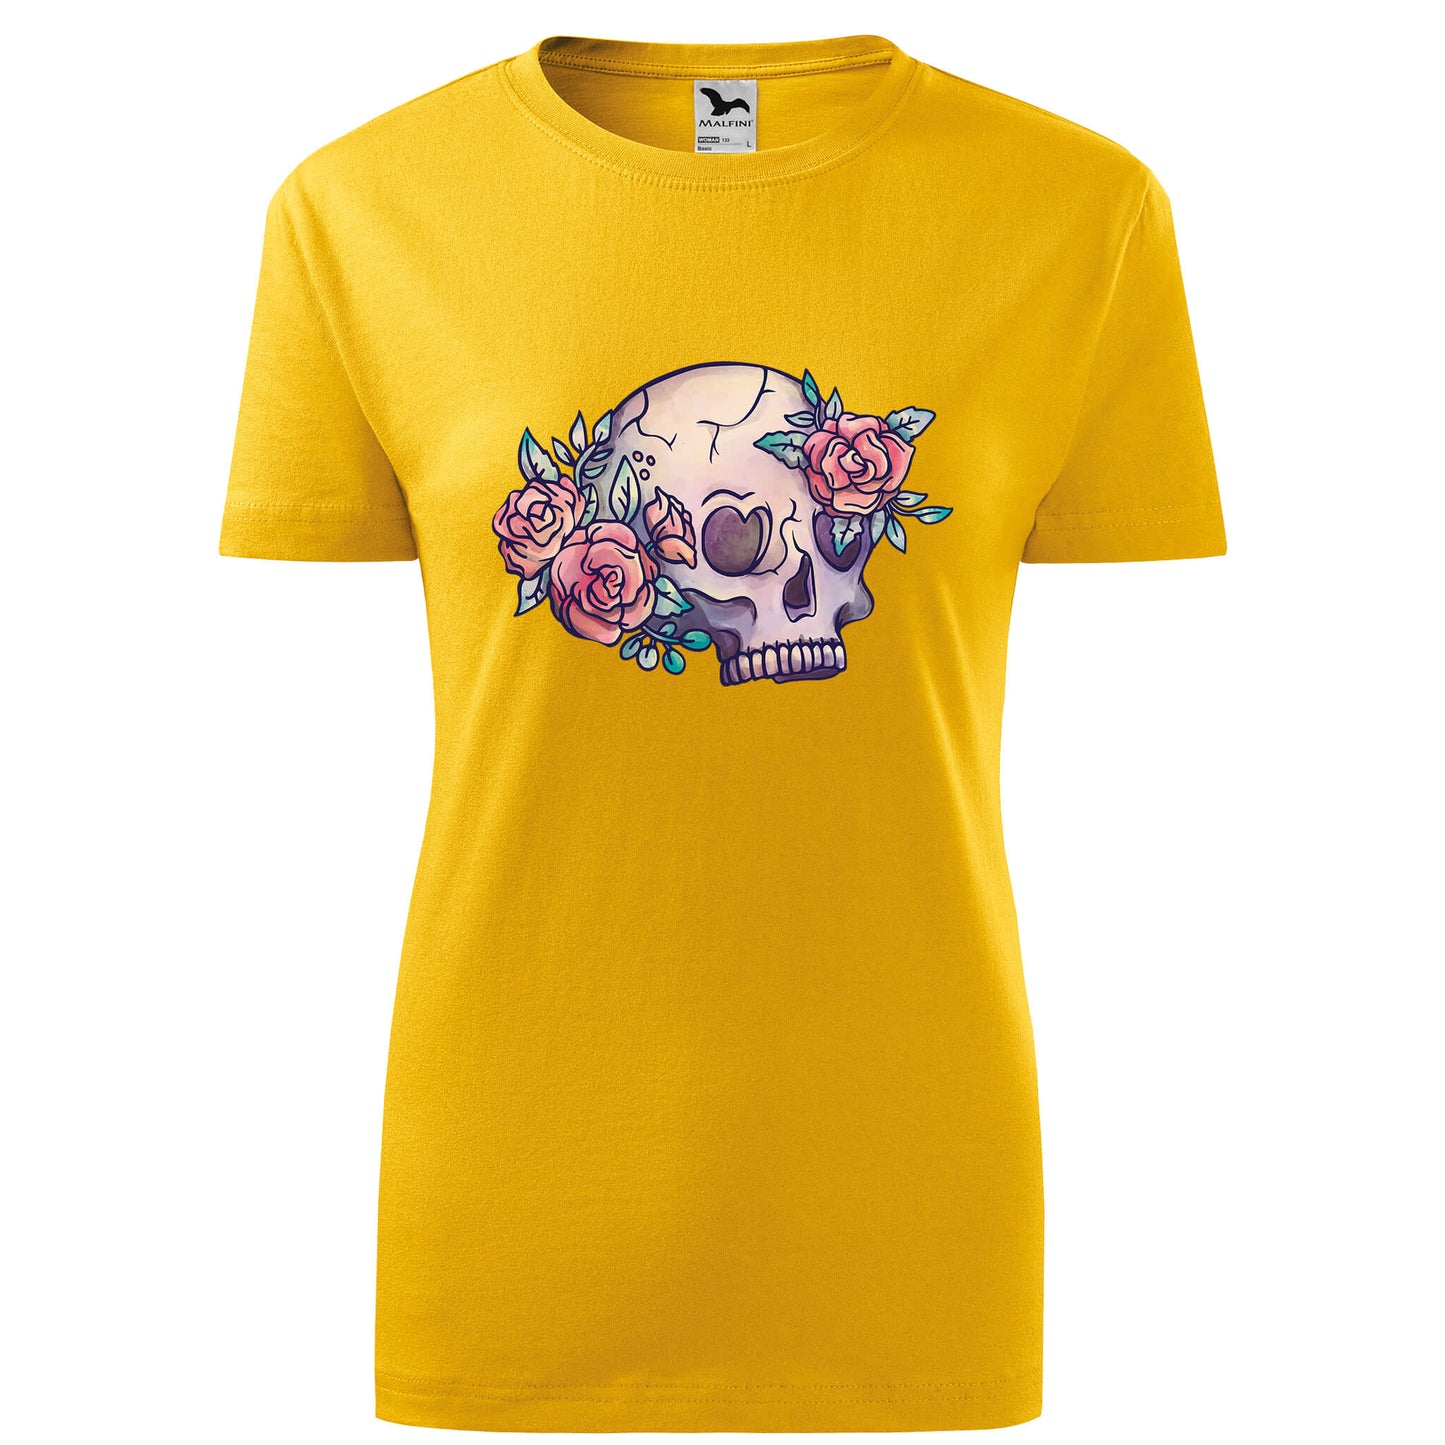 Floral skull t-shirt - rvdesignprint